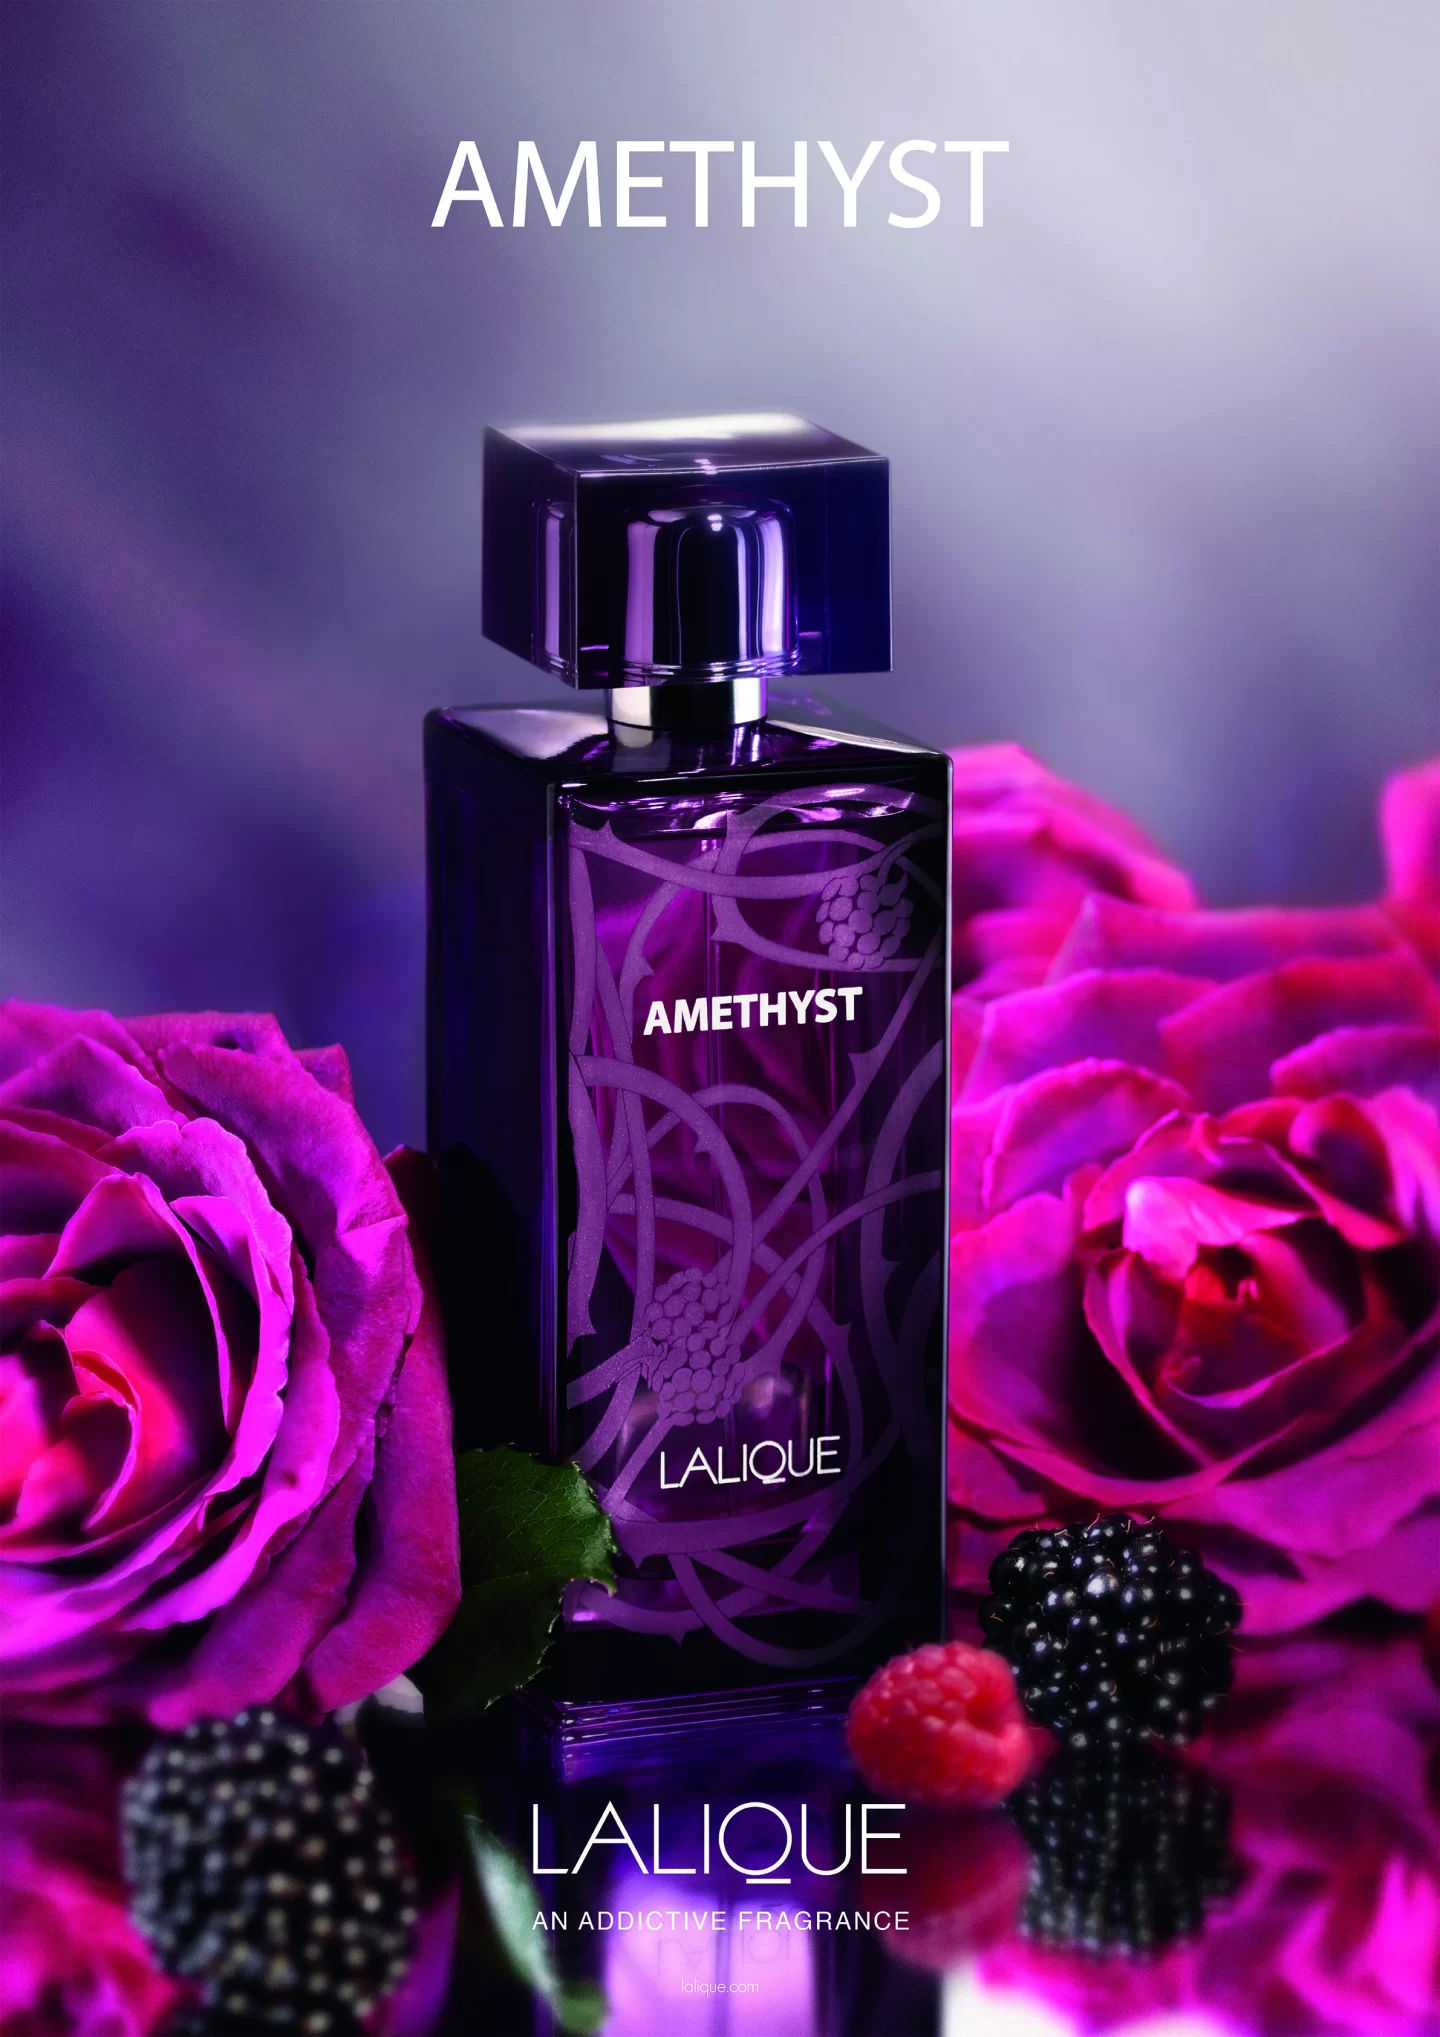 Lalique Amethyst
Best Blackcurrant Perfumes
Cassis Fragrances